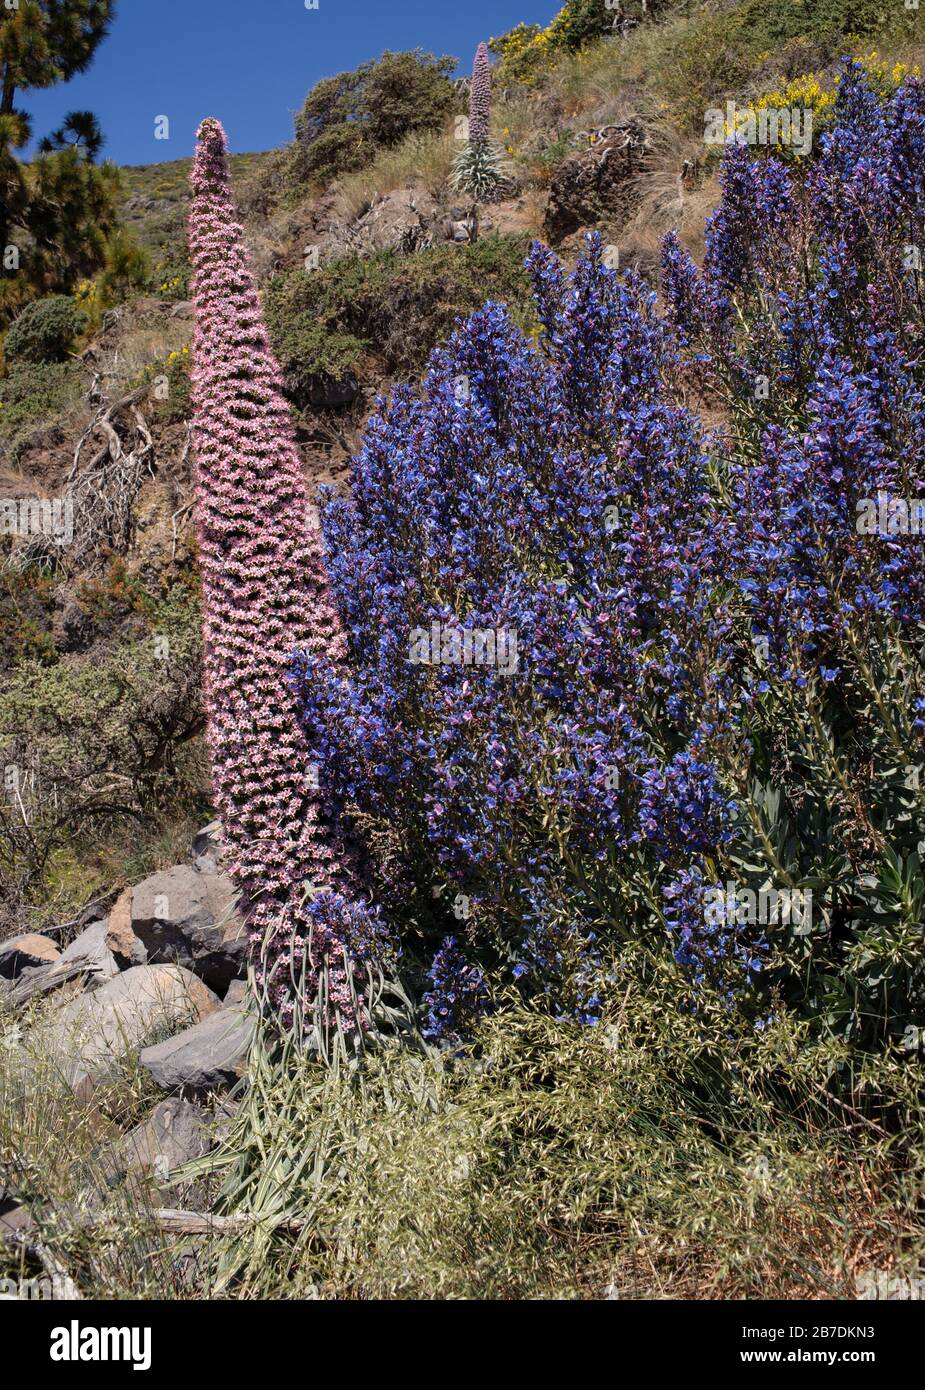 Echium perezii and Echium gentianoides (blue flowering), two endemic species of La Palma in their natural habitat Stock Photo